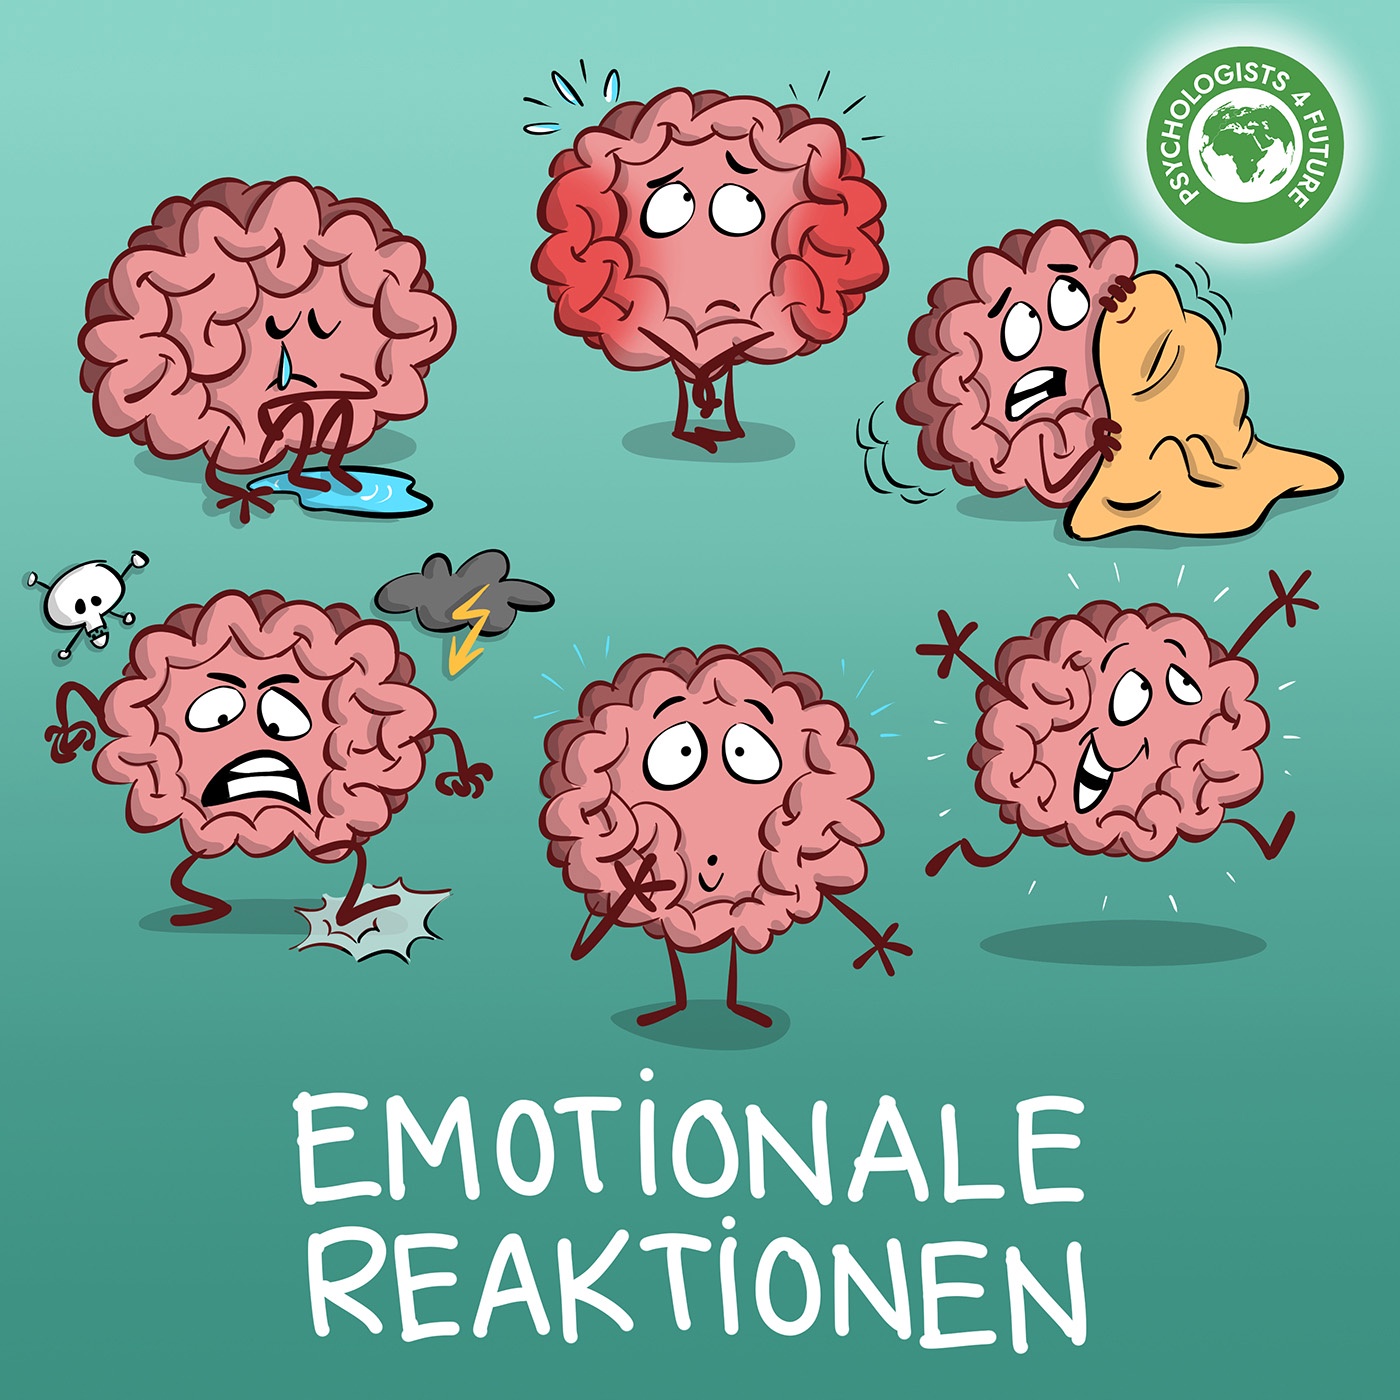 4. Emotionale Reaktionen